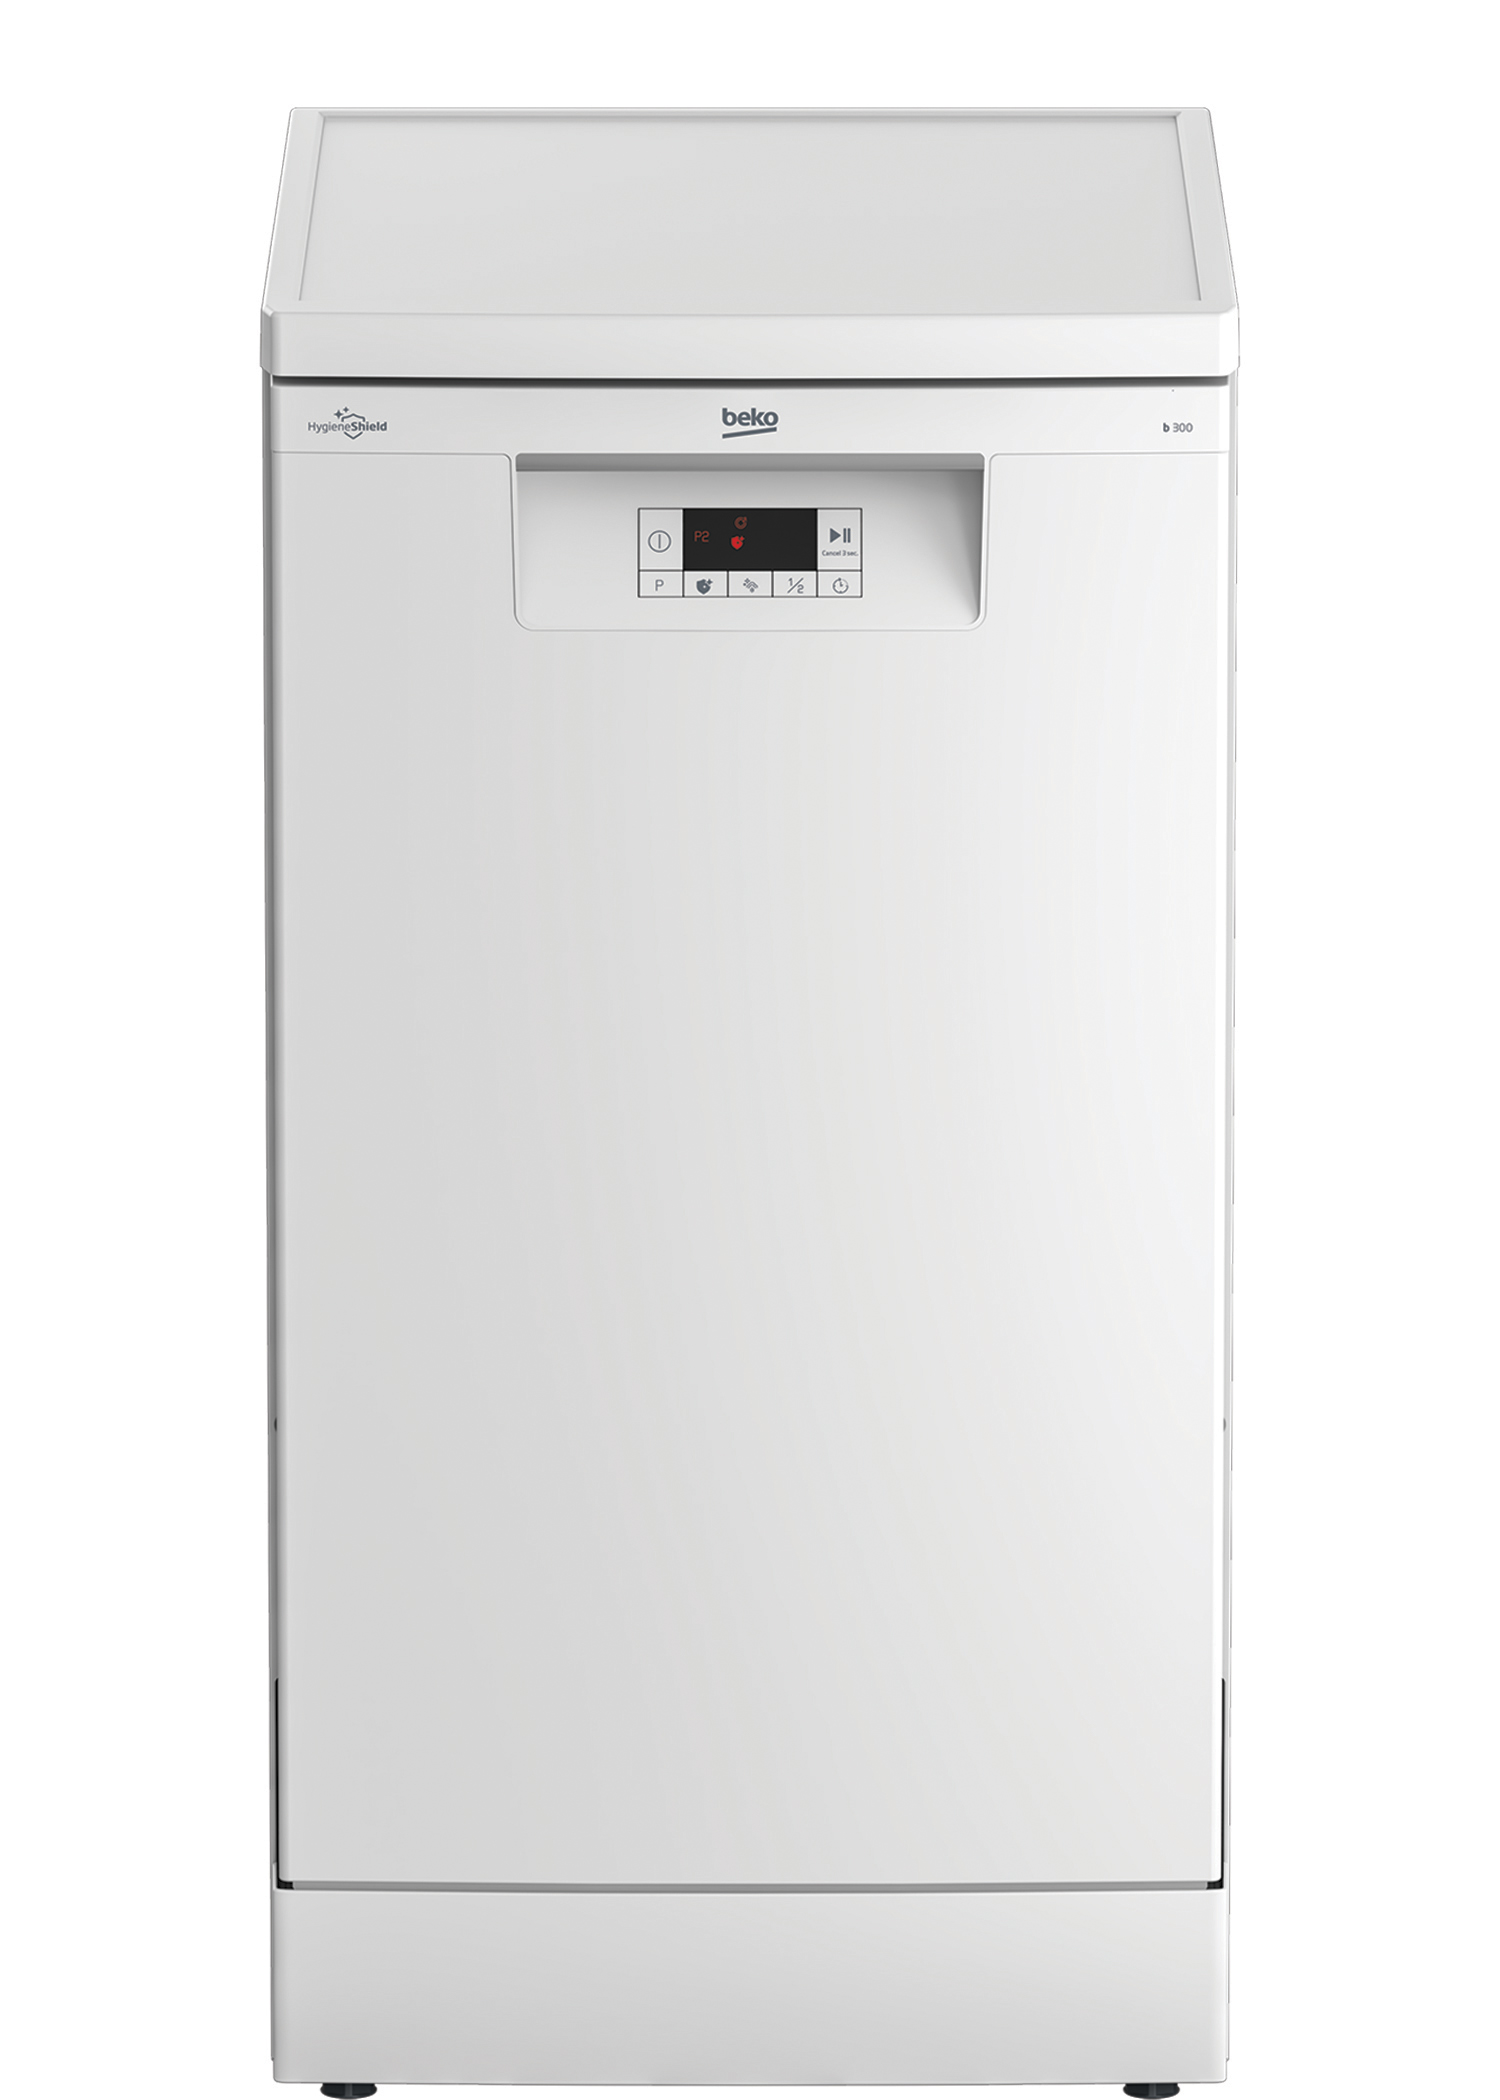 Посудомоечная машина Beko BDFS15020W белый отдельностоящая посудомоечная машина 45см dvs050r02s 7656308335 beko